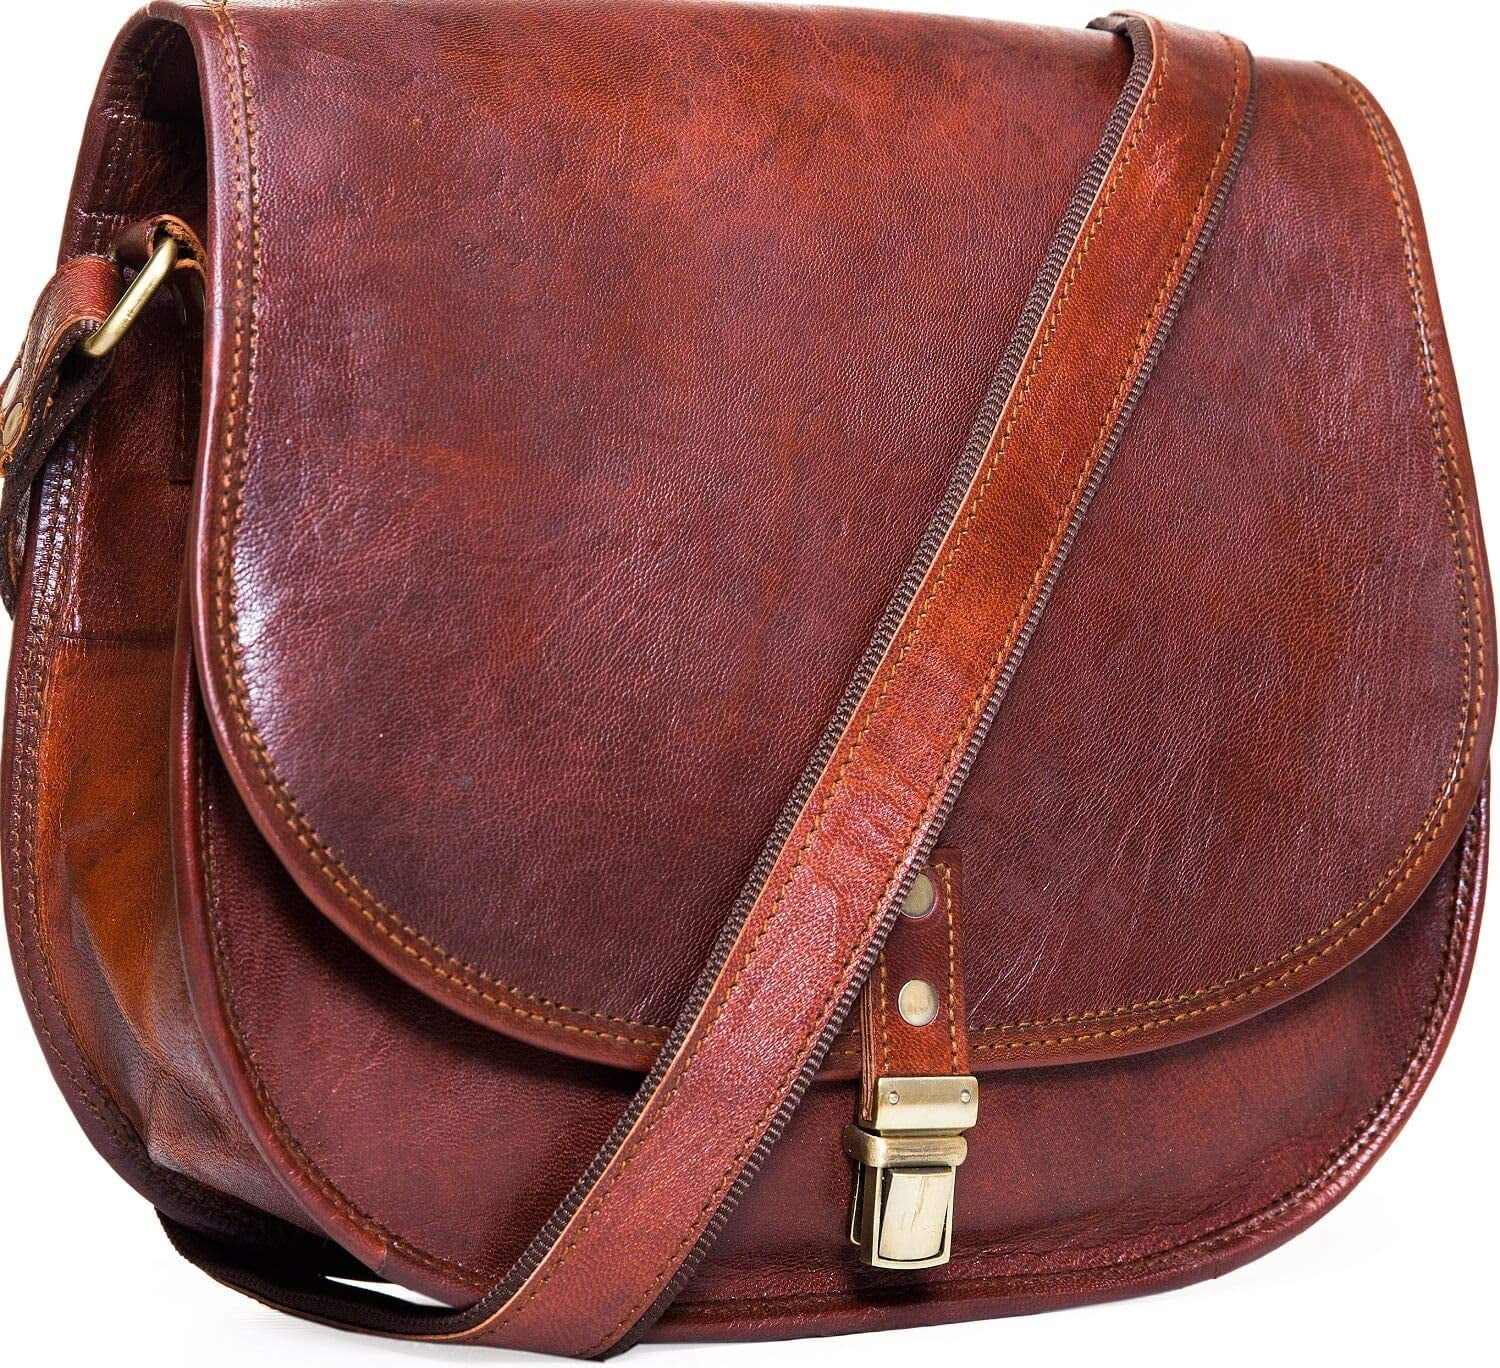 Bags & Purses Handbags Shoulder Bags LADIES Hand Bag LEATHER satchel shoulder crossbody BROWN 